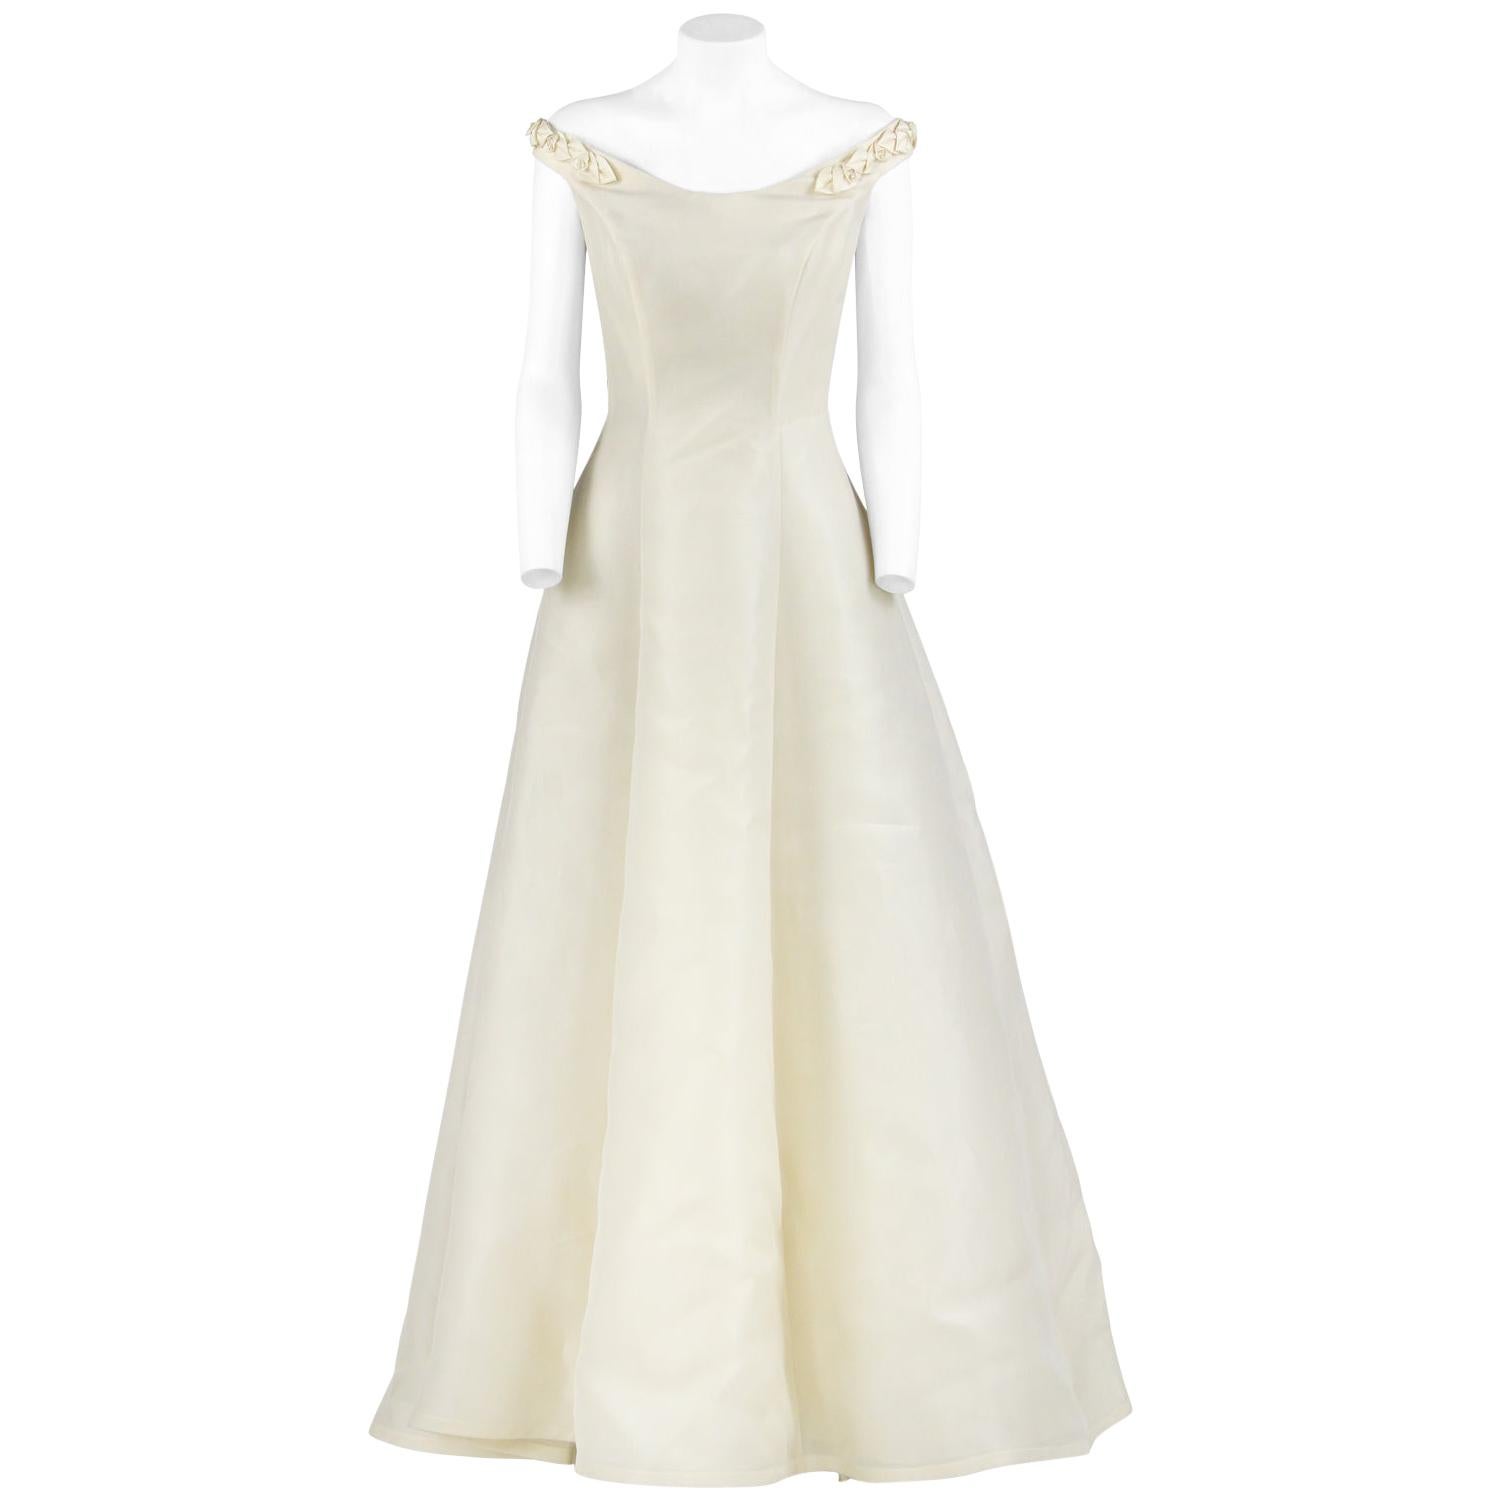 Atelier Aimée Ivory Silk Vintage Wedding Dress, 2000s